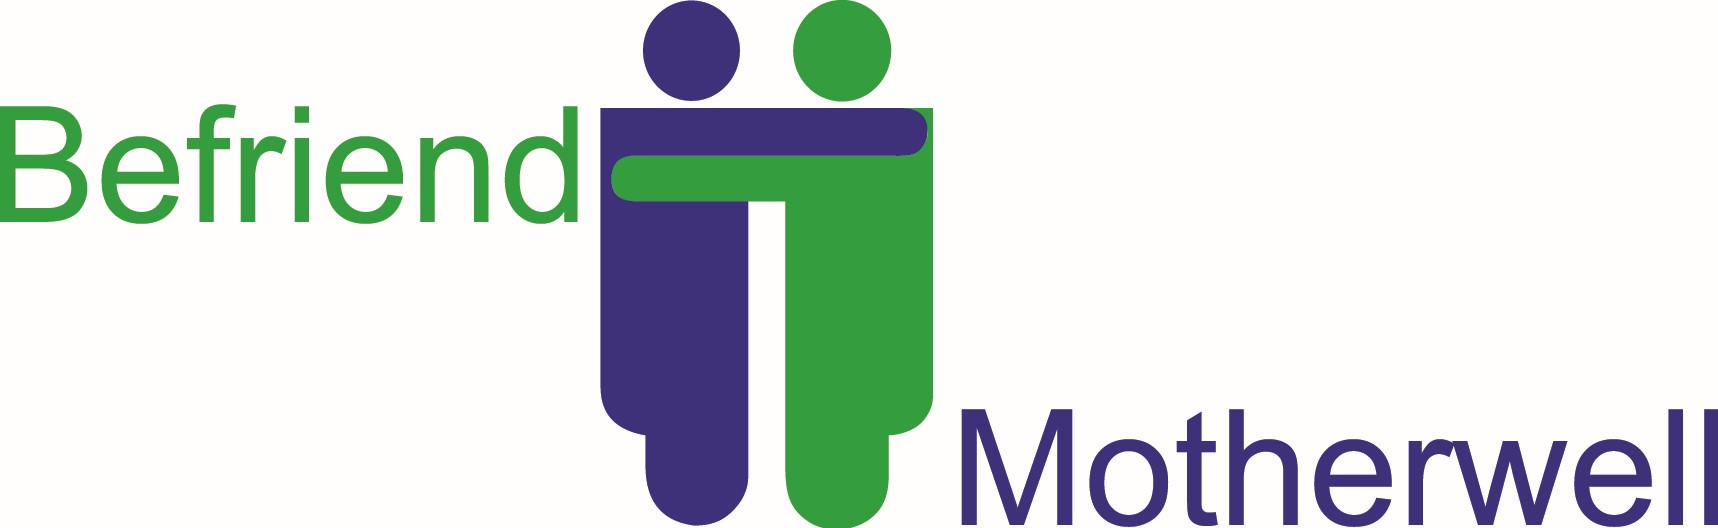 Befriend Motherwell  Logo